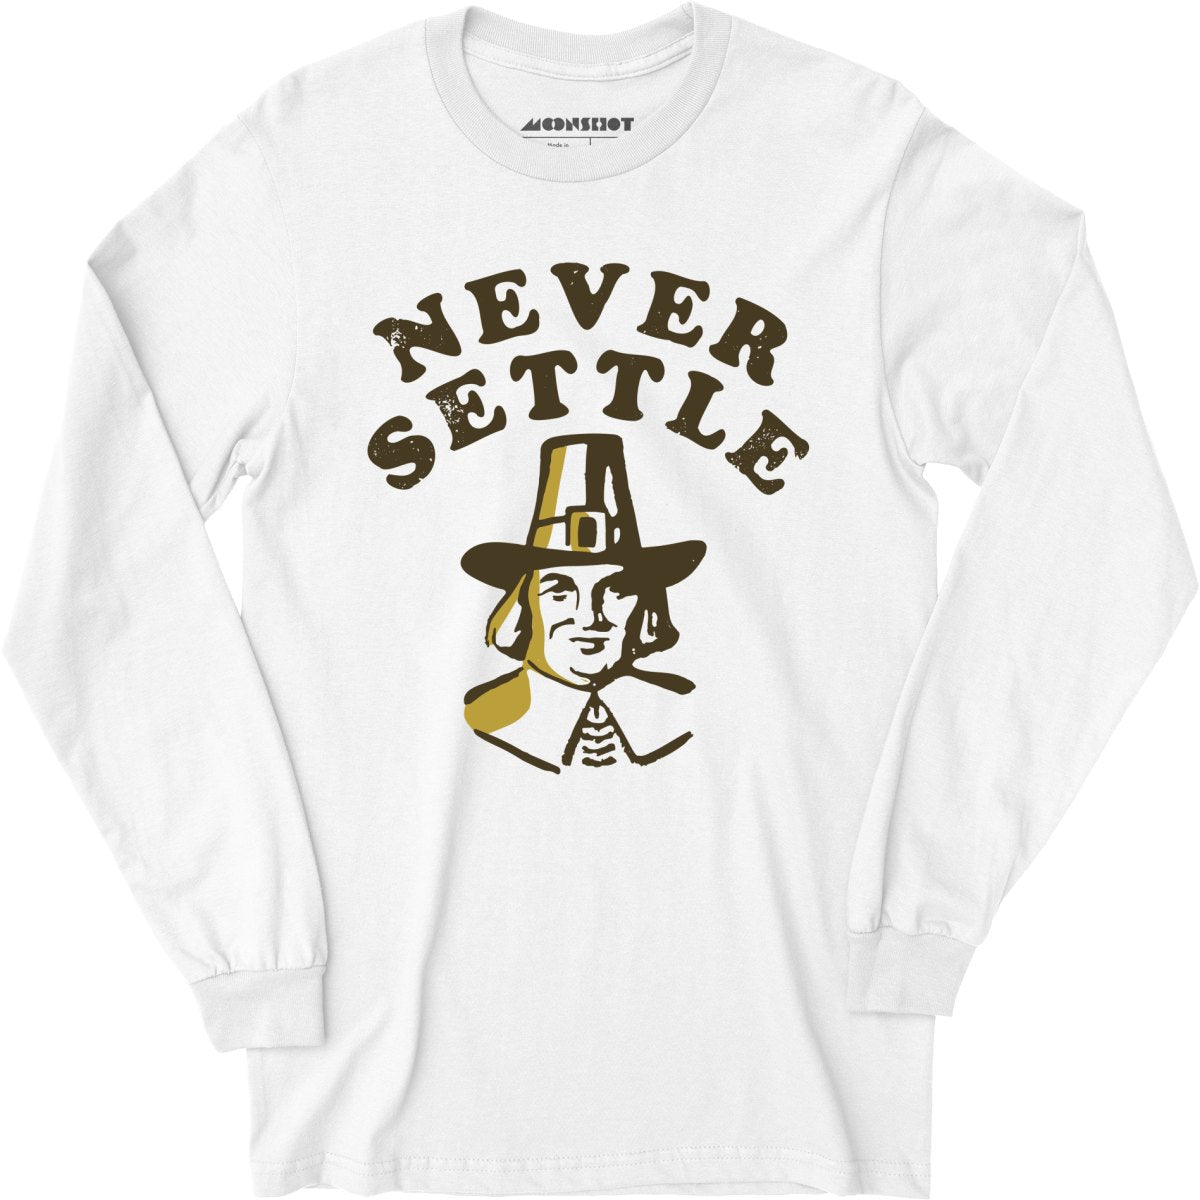 Never Settle - Long Sleeve T-Shirt